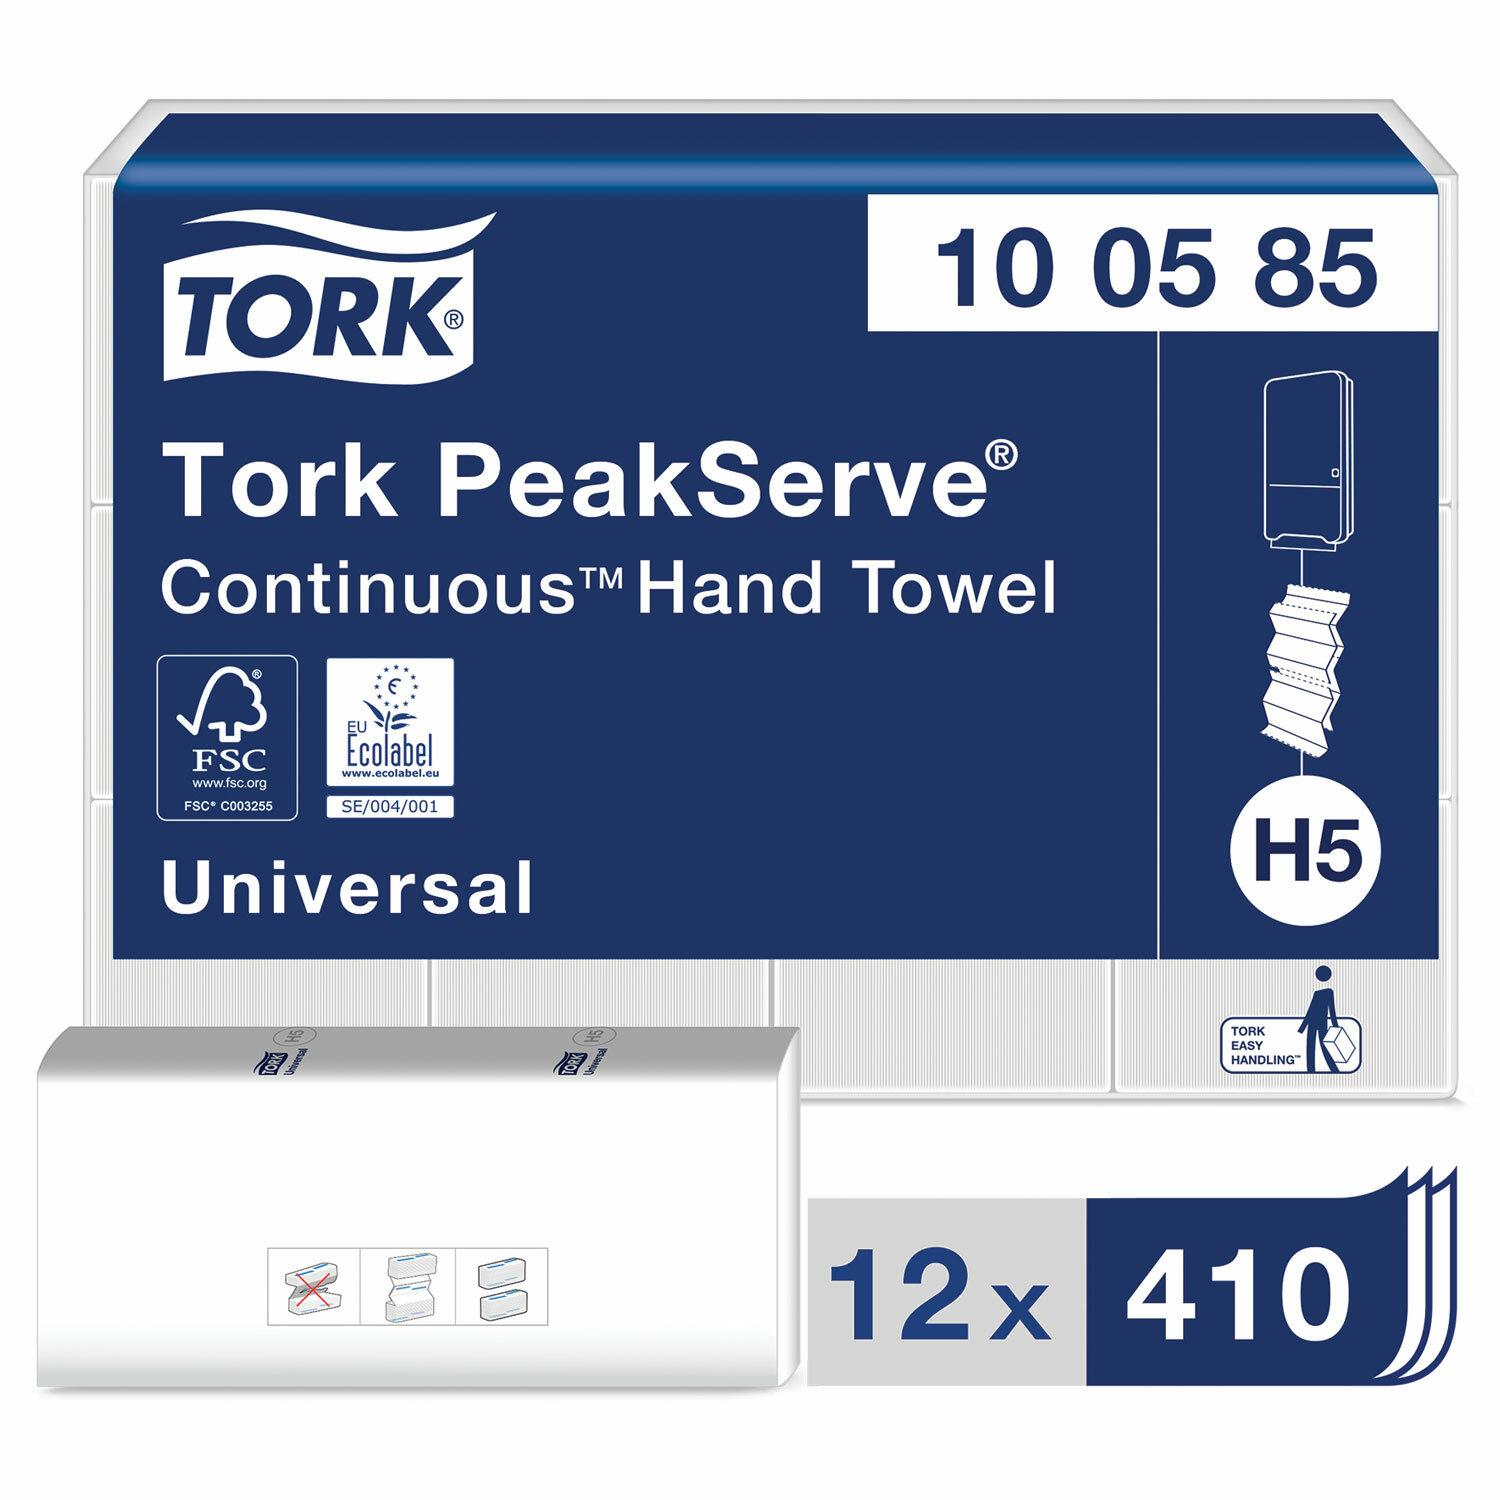  TORK 100585